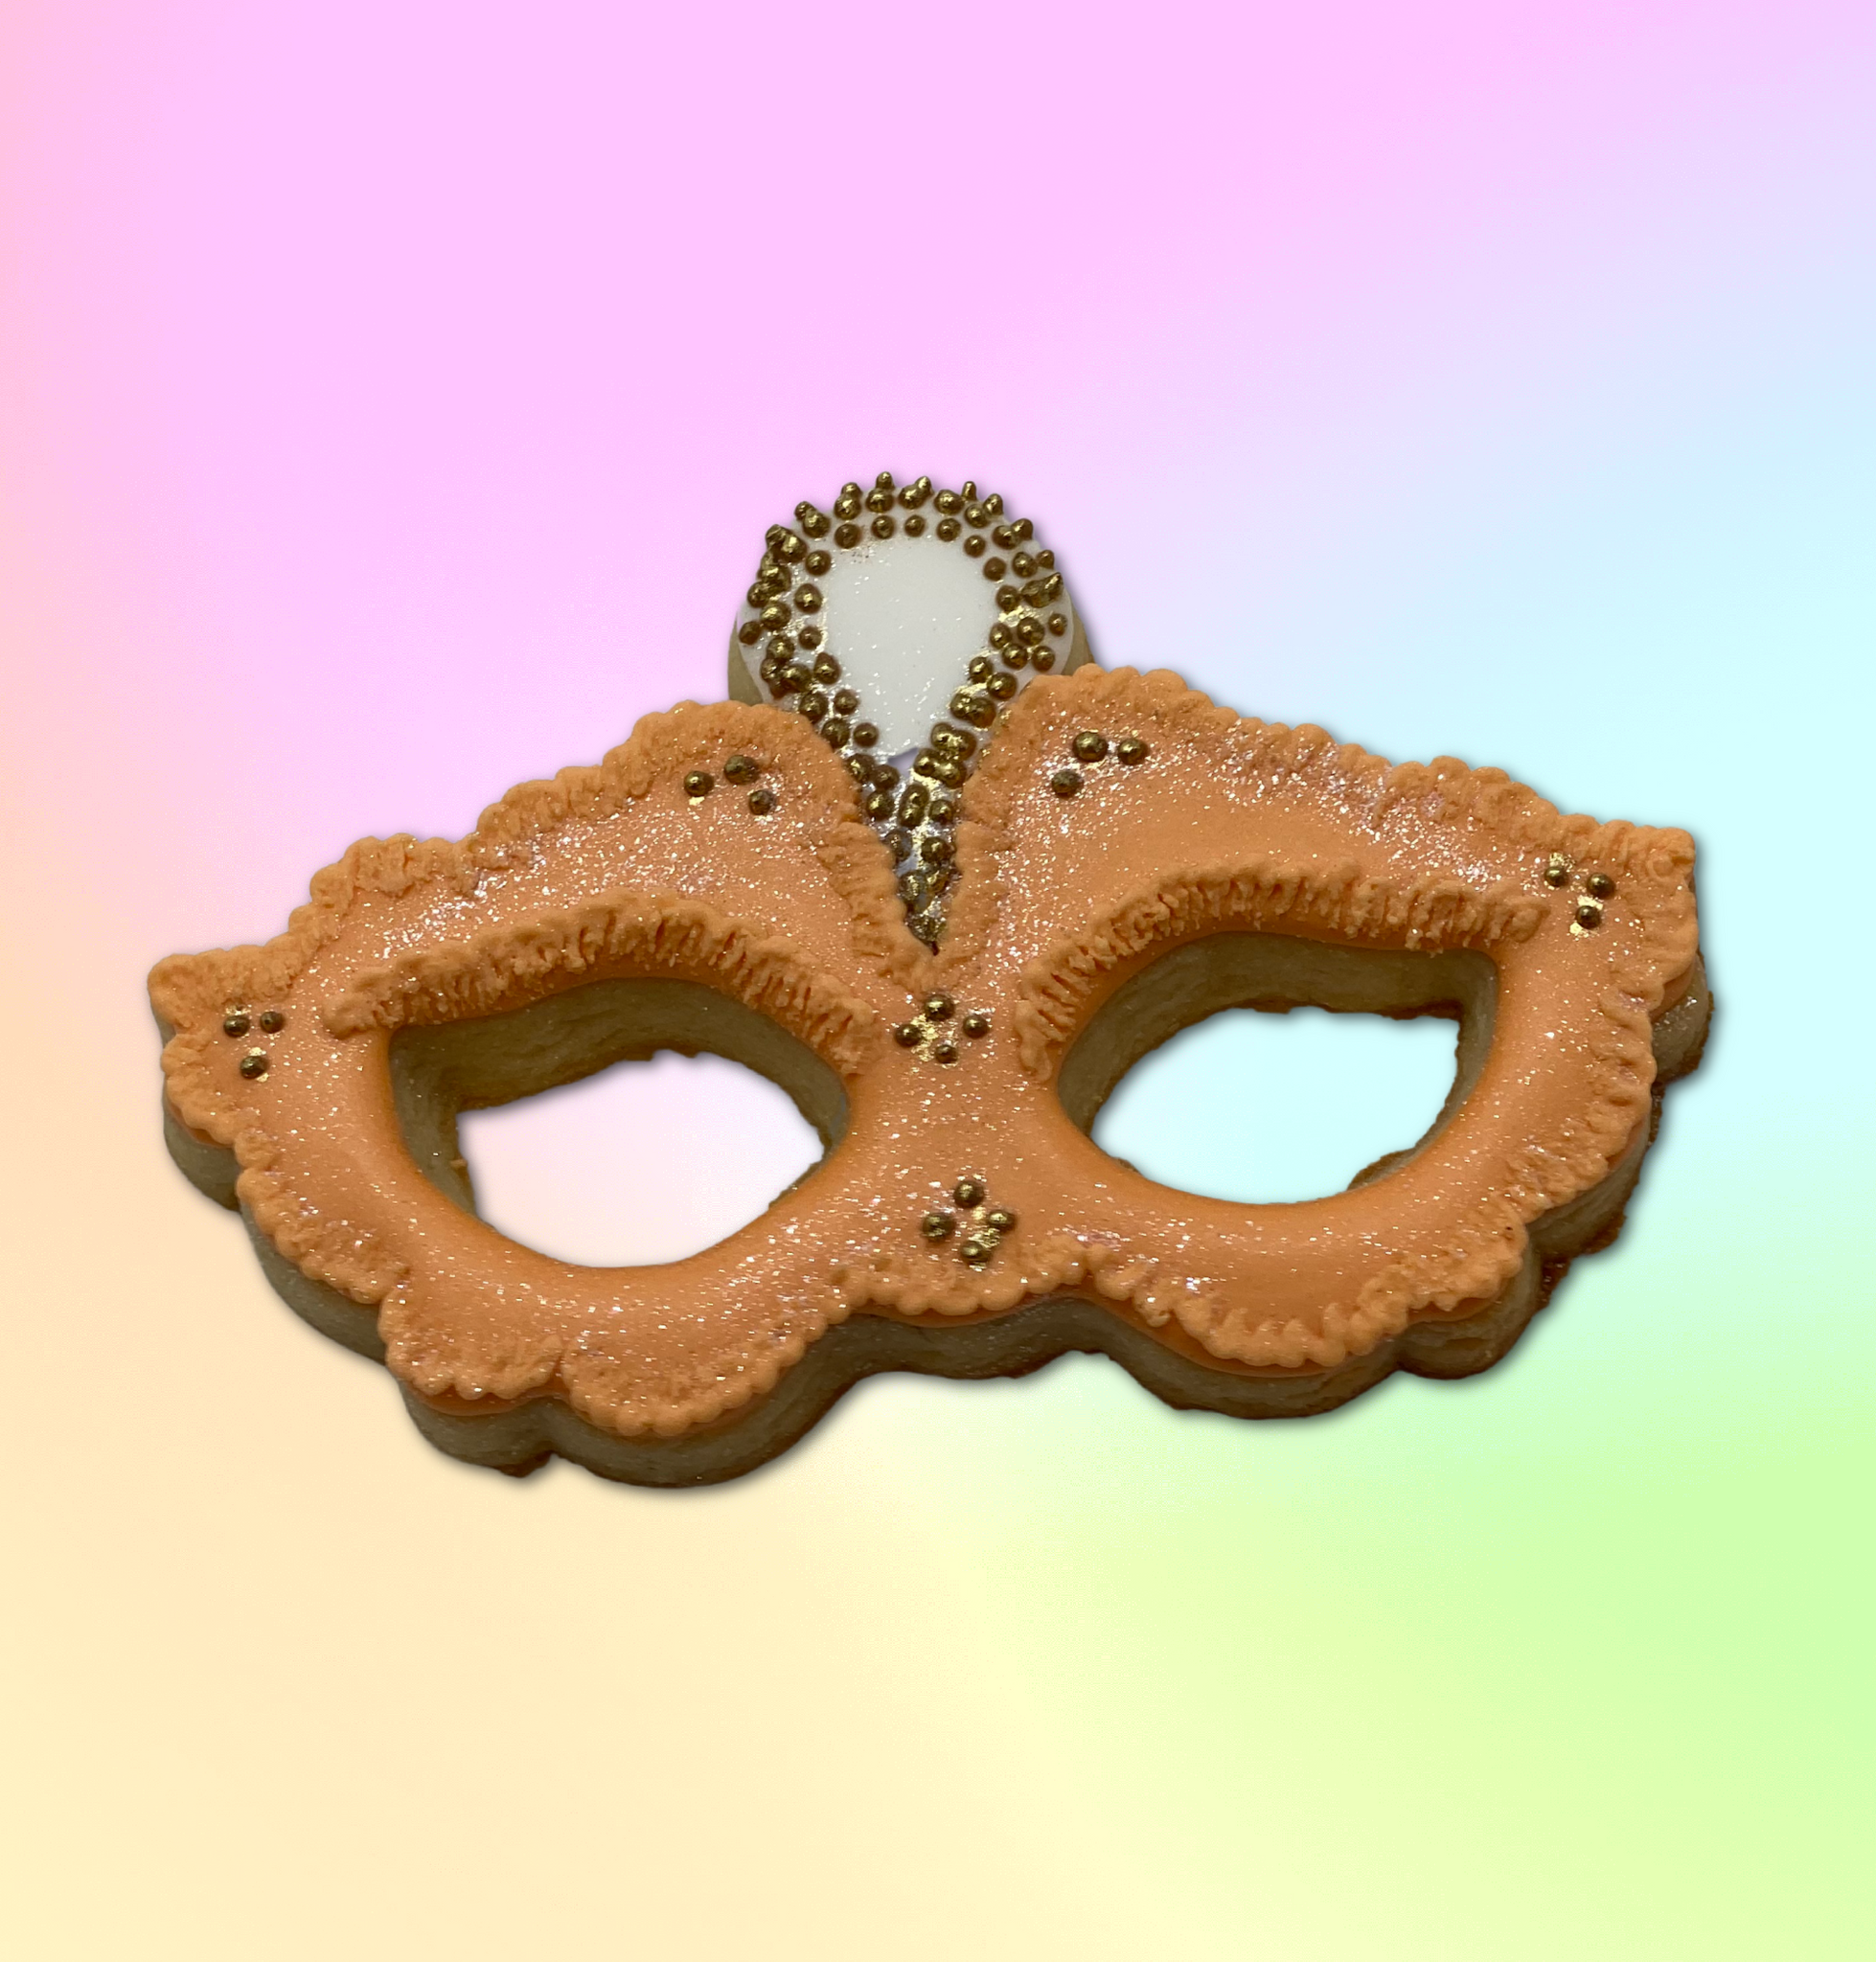 Mardi gras mask cookie cutter